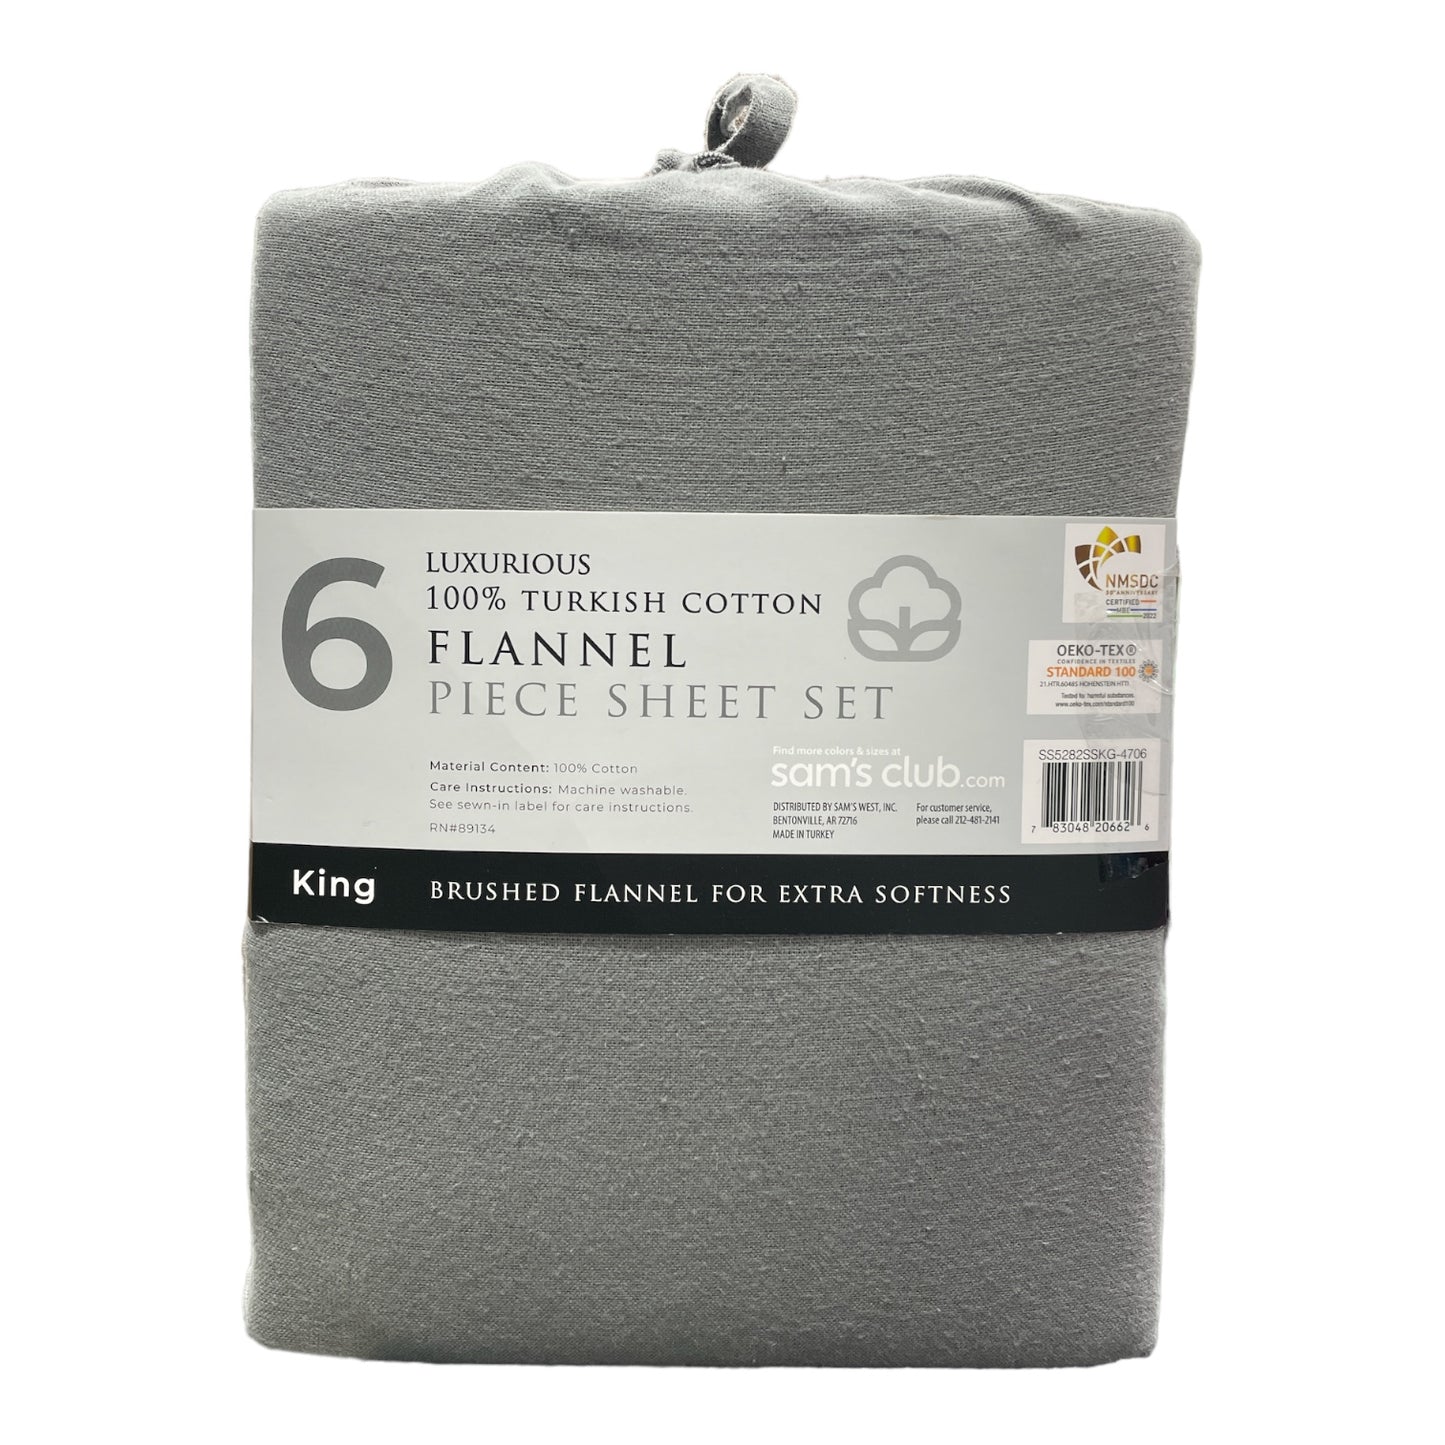 Luxurious Turkish Cotton 6 Piece Flannel Sheet Set, Gray, King